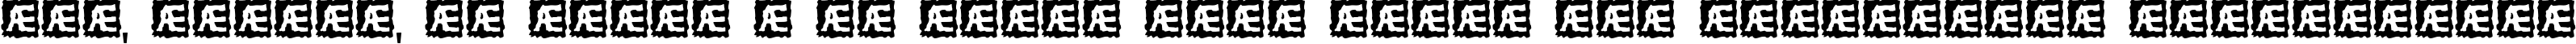 Пример написания шрифтом Euphoric BRK текста на украинском